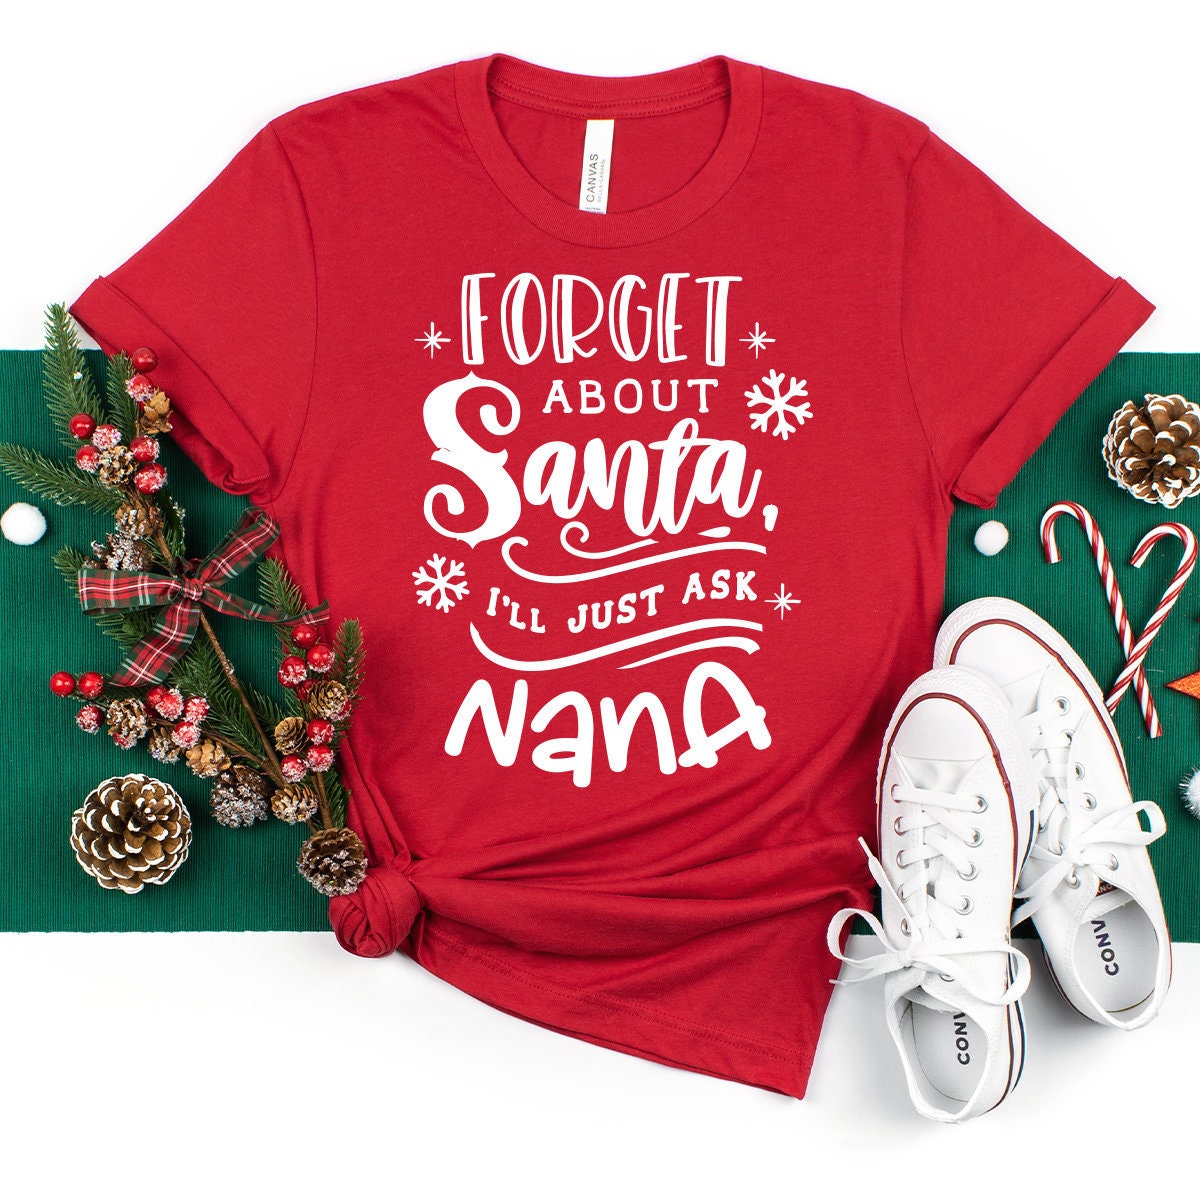 Christmas Nana Shirt, Nana Claus Shirt, Nana Gift For Xmas, Christmas Shirt, Winter T-Shirt, Forget About I'll Just Ask Nana Shirt - Fastdeliverytees.com